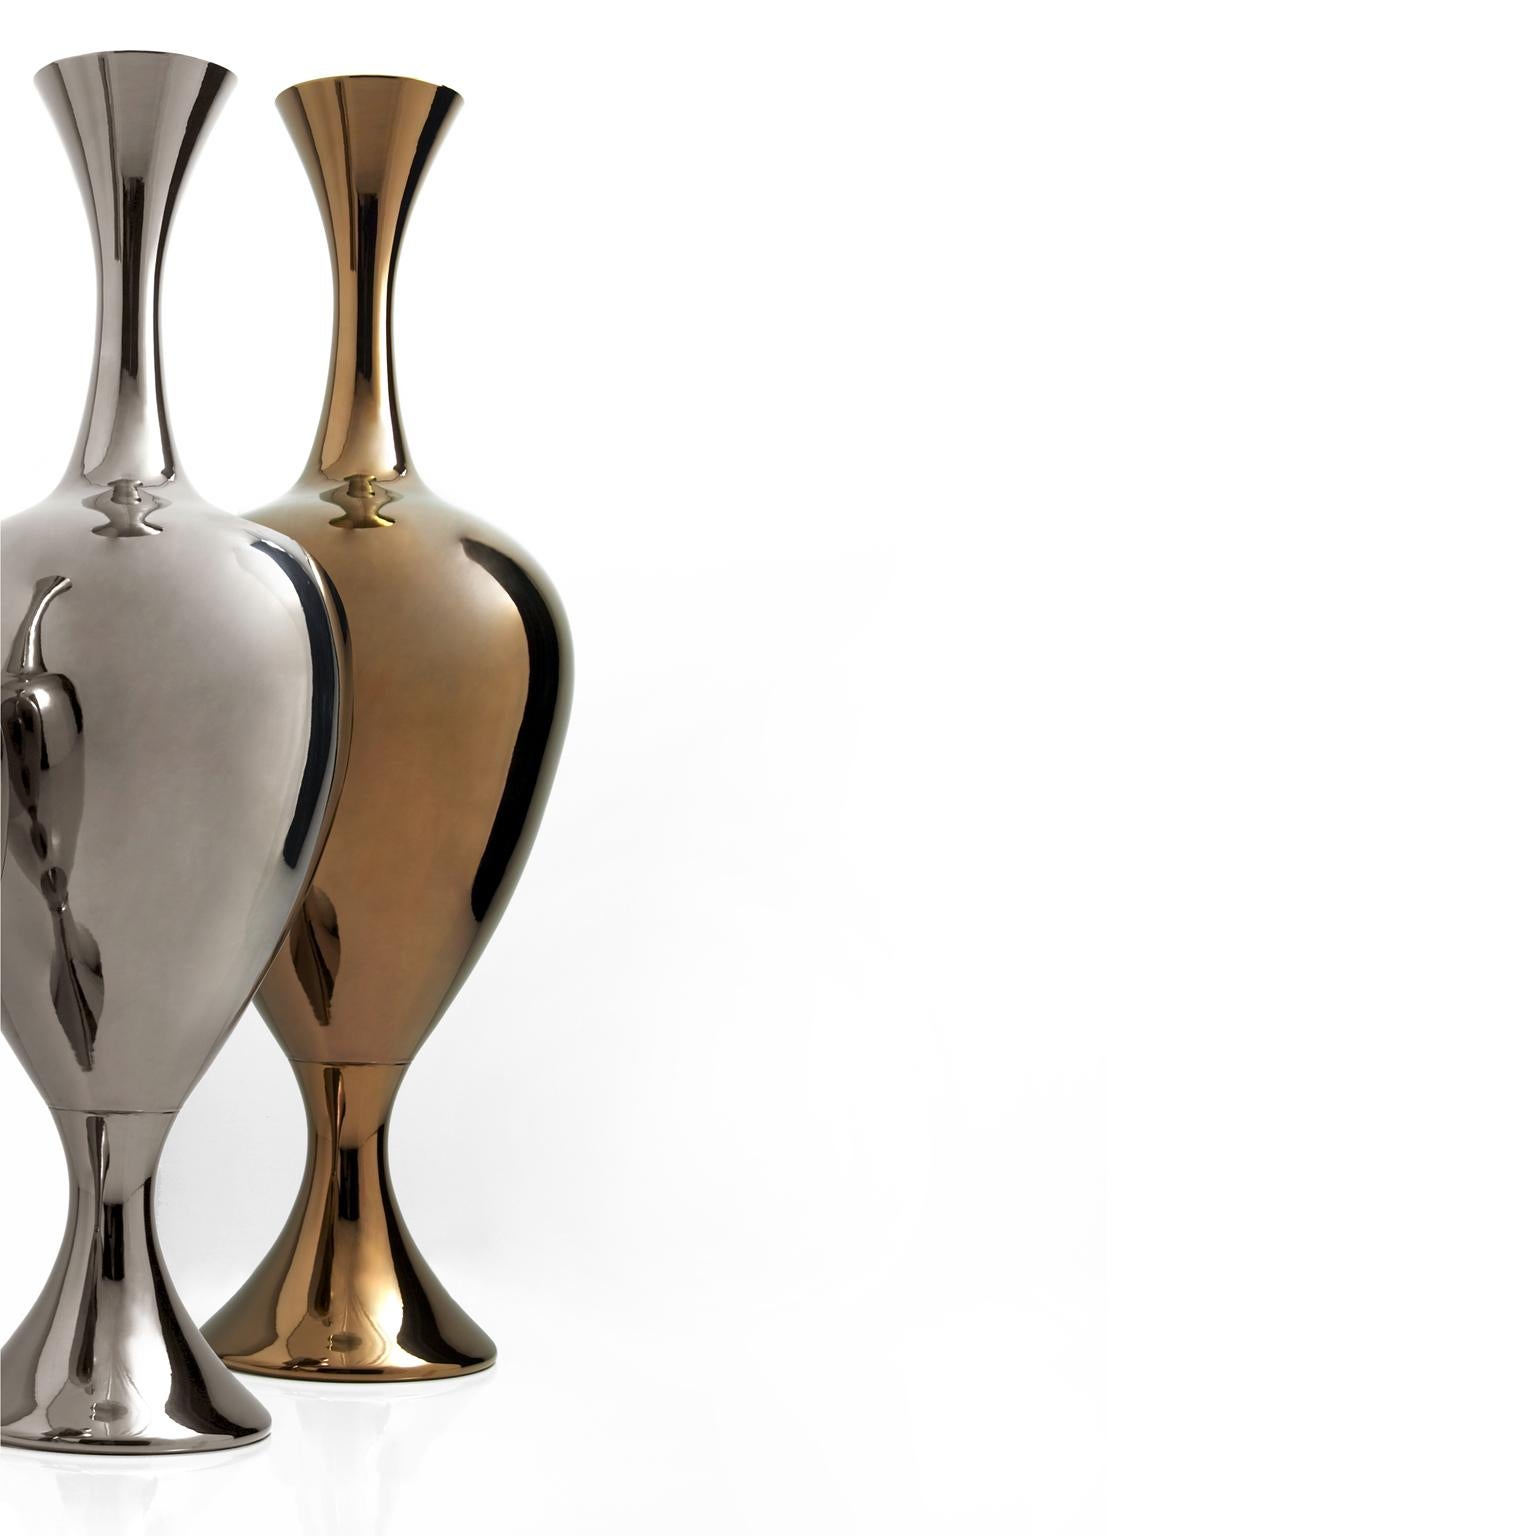 Ceramic vase handcrafted in bronze
EVE - code VS004, measures: Height 140.0 cm., diameter 45.0 cm.